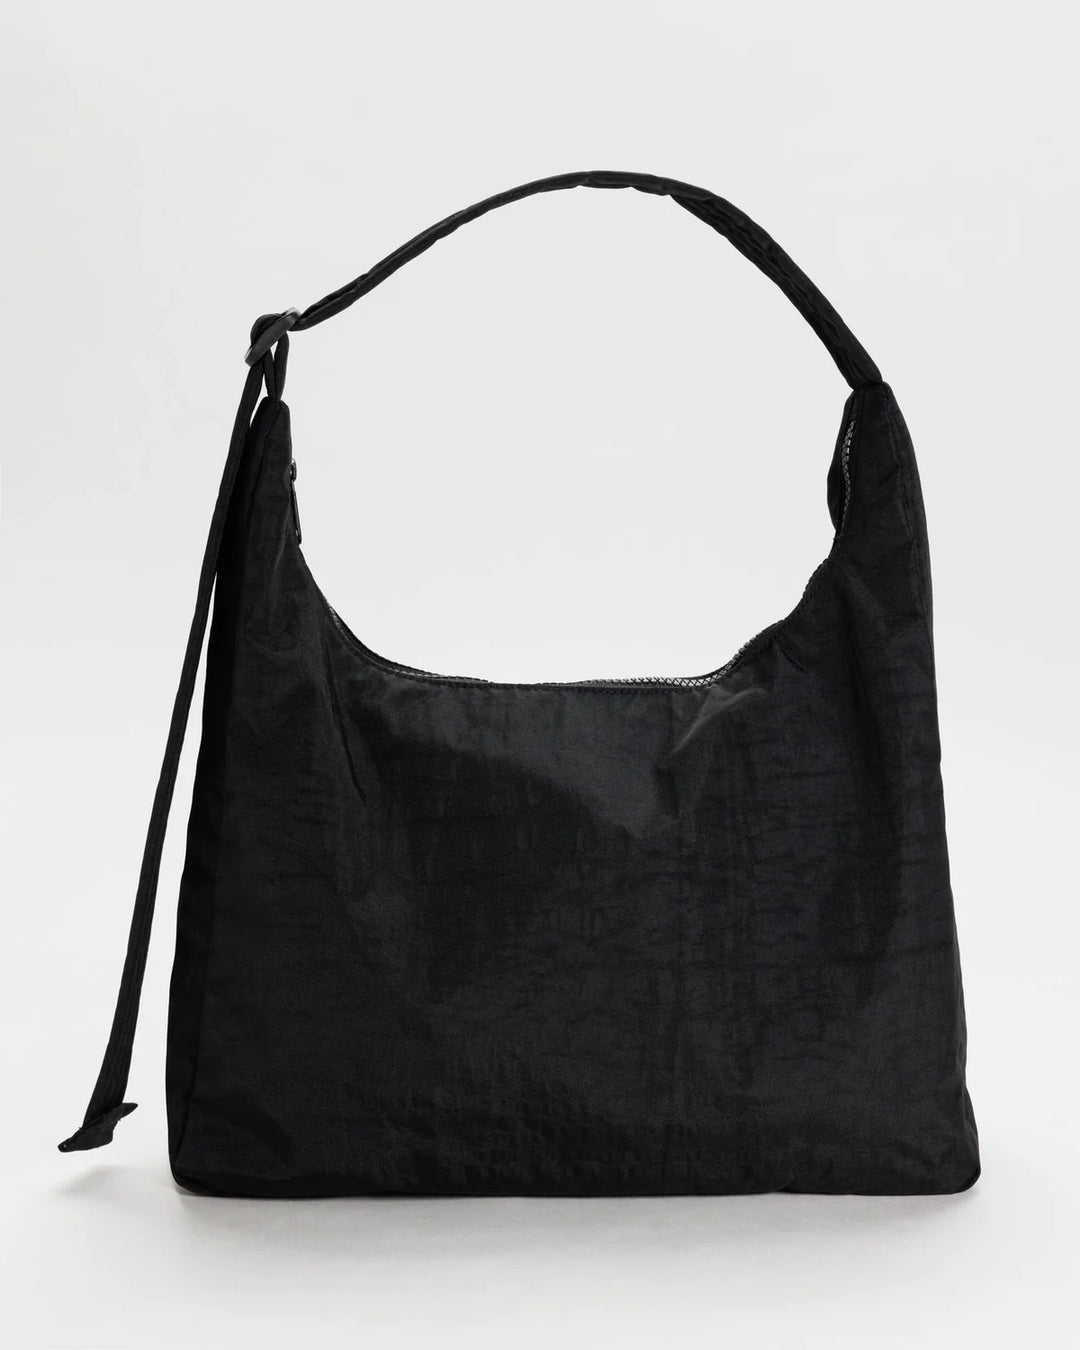 Baggu - Nylon Shoulder Bag - Black